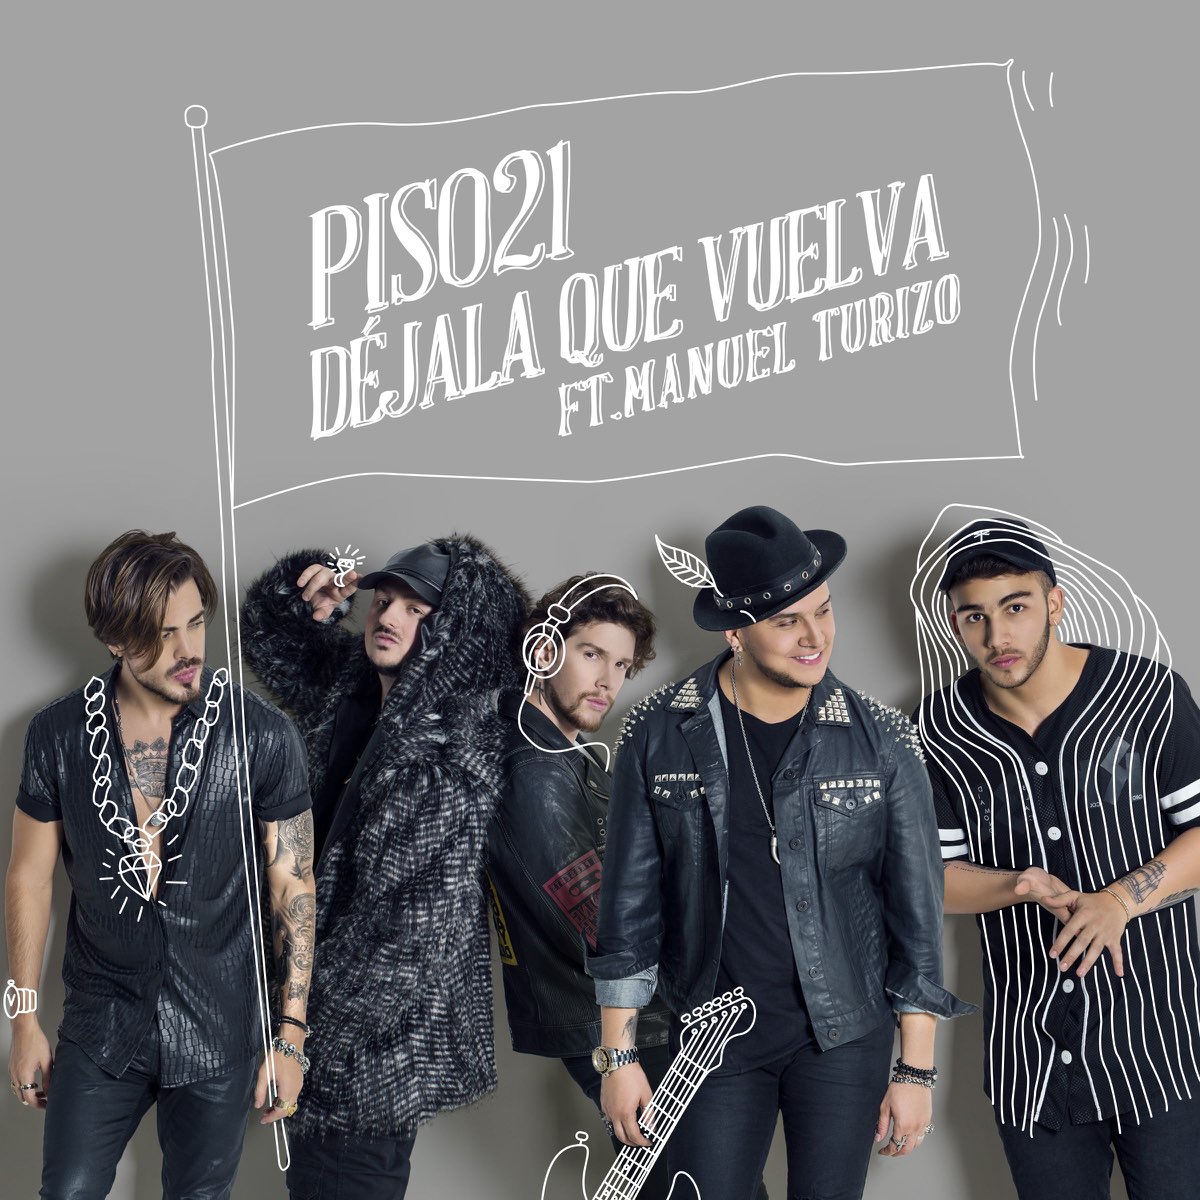 Déjala Que Vuelva (feat. Manuel Turizo) - Single by Piso 21 on Apple Music